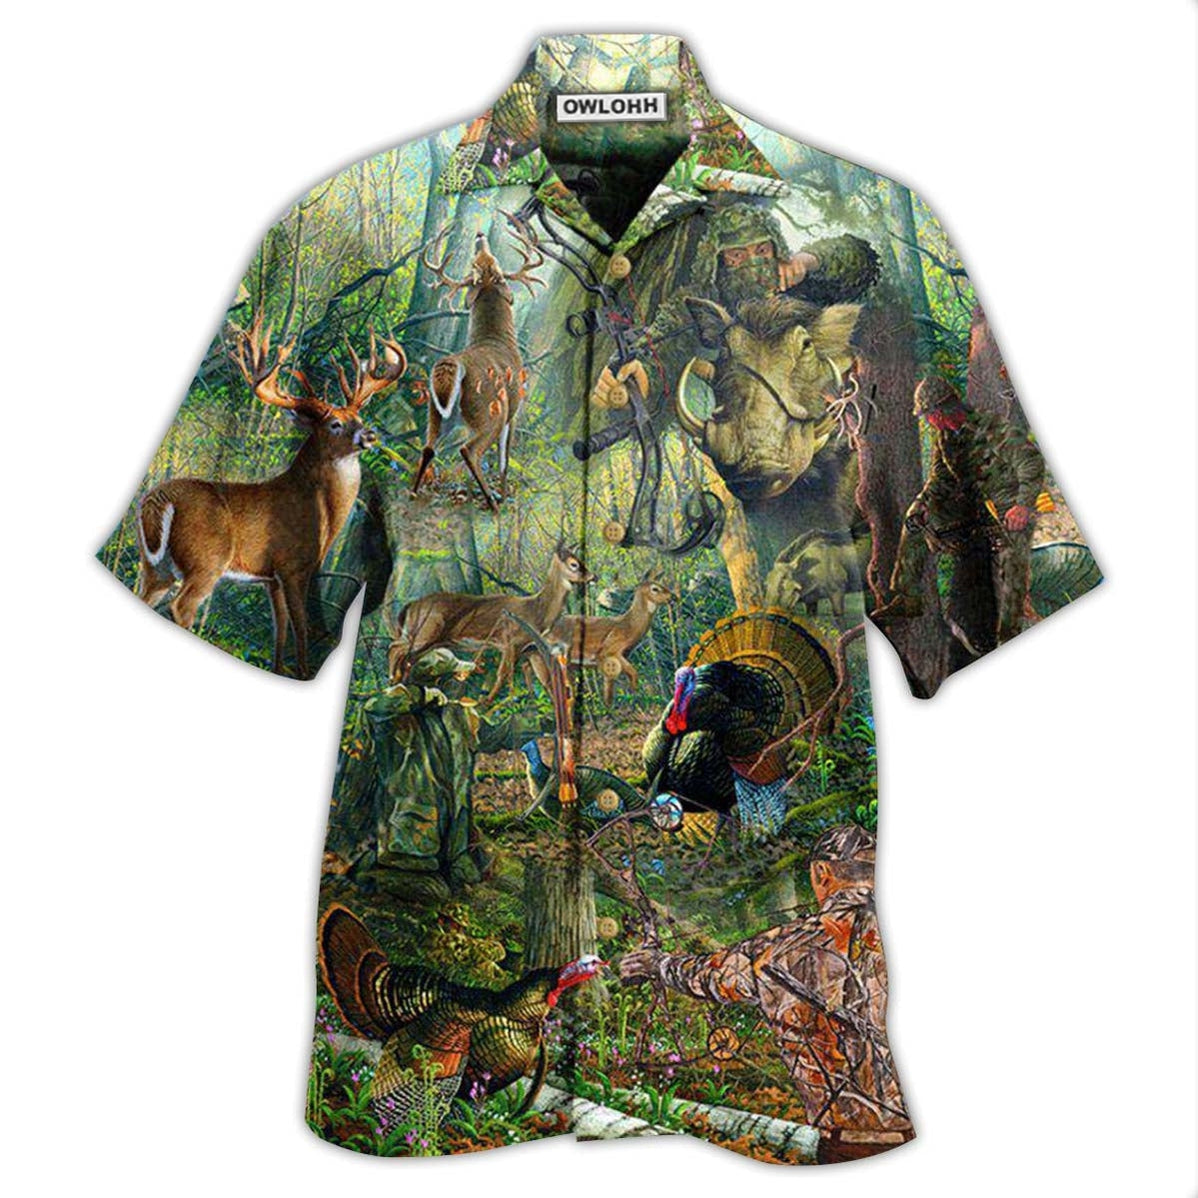 Hawaiian Shirt / Adults / S Hunting The Man The Myth The Hunting Legend Forest - Hawaiian Shirt - Owls Matrix LTD